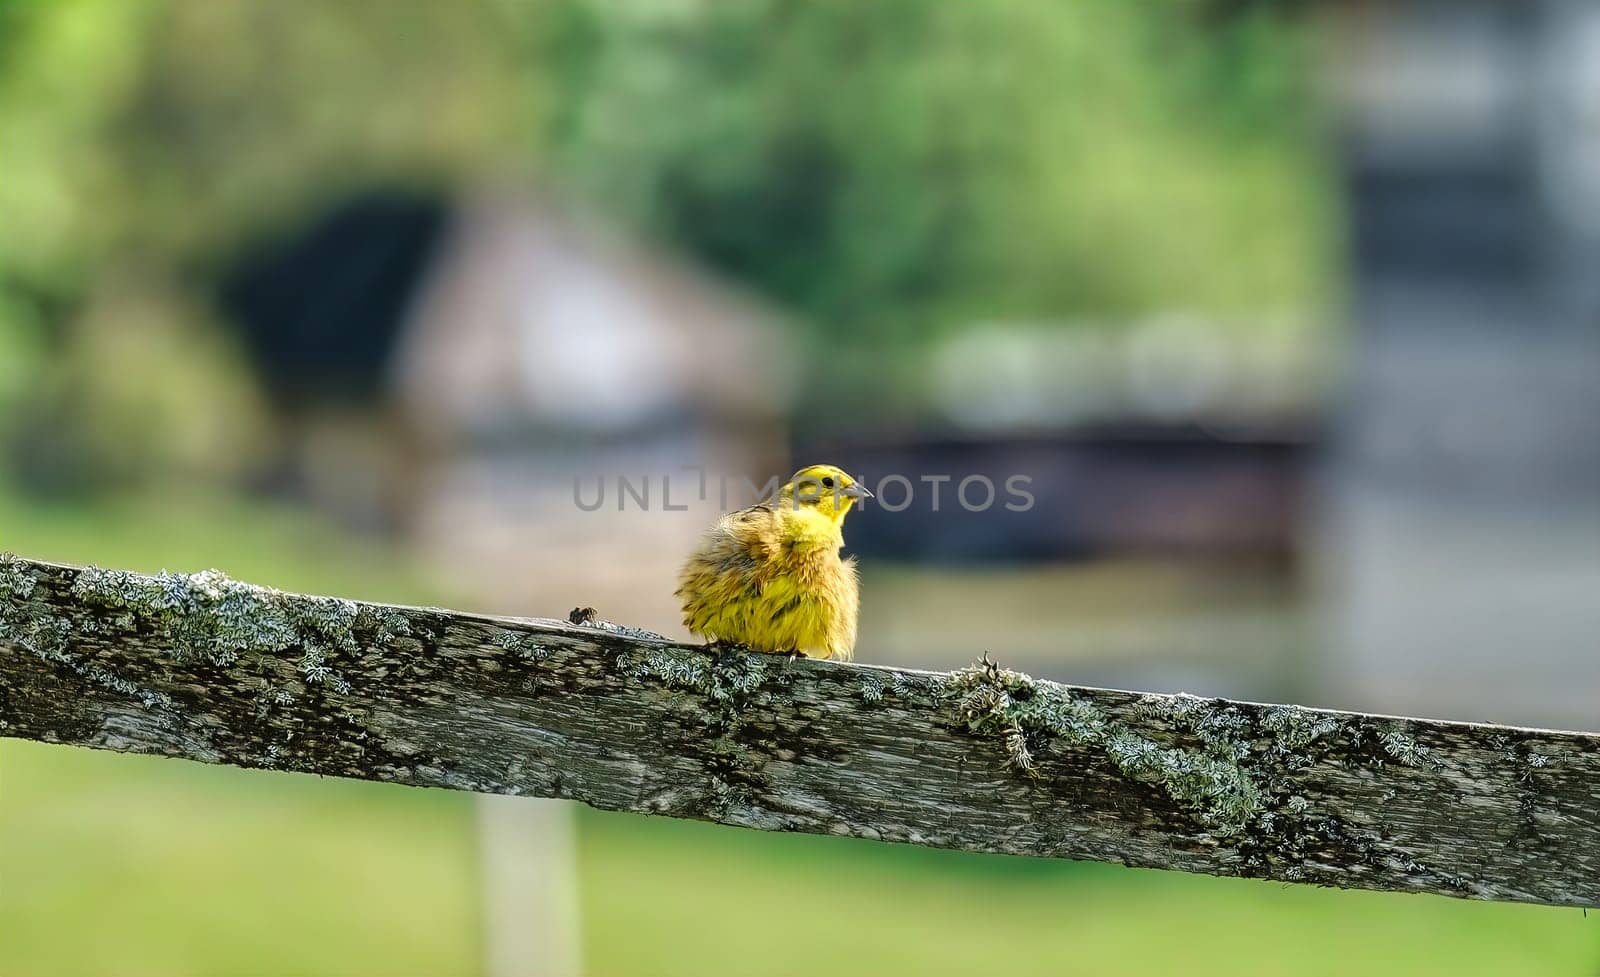 Beautiful Yellow Bird on the wood download by igor010